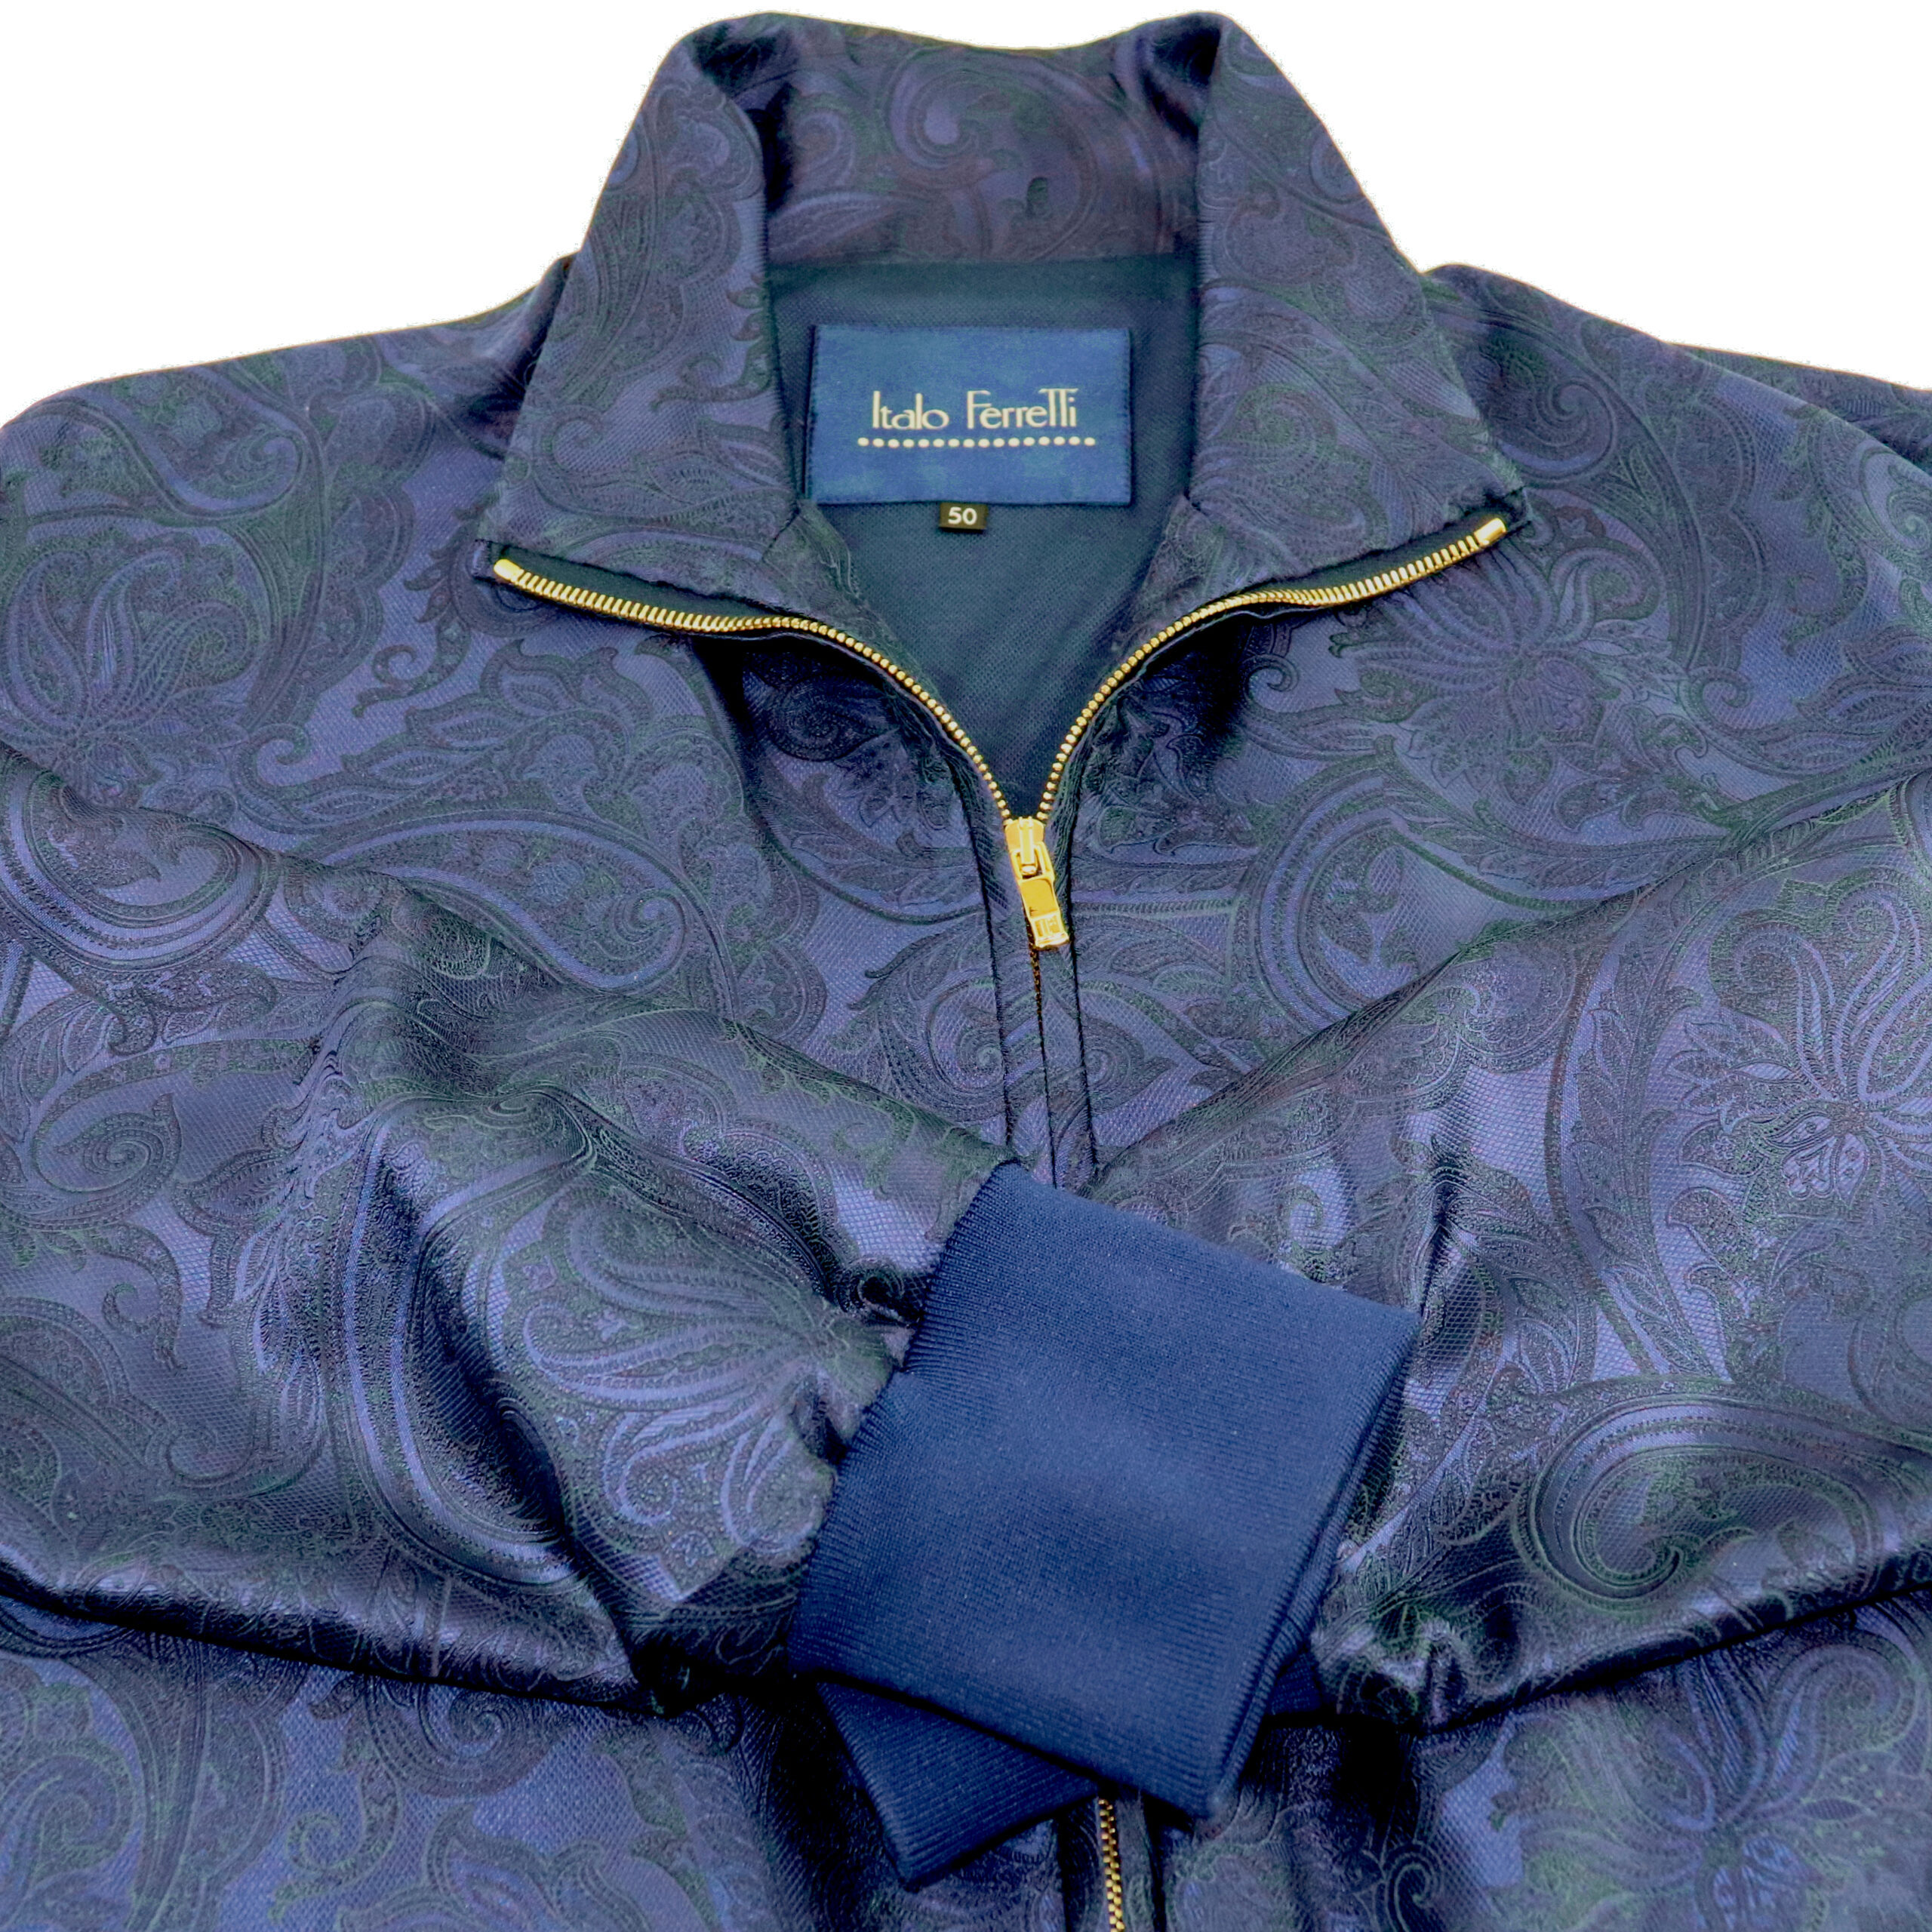 Silk Custom Bomber Jacket, Medallions Pattern, Matching Paisley lining, Handmade in Italy 50